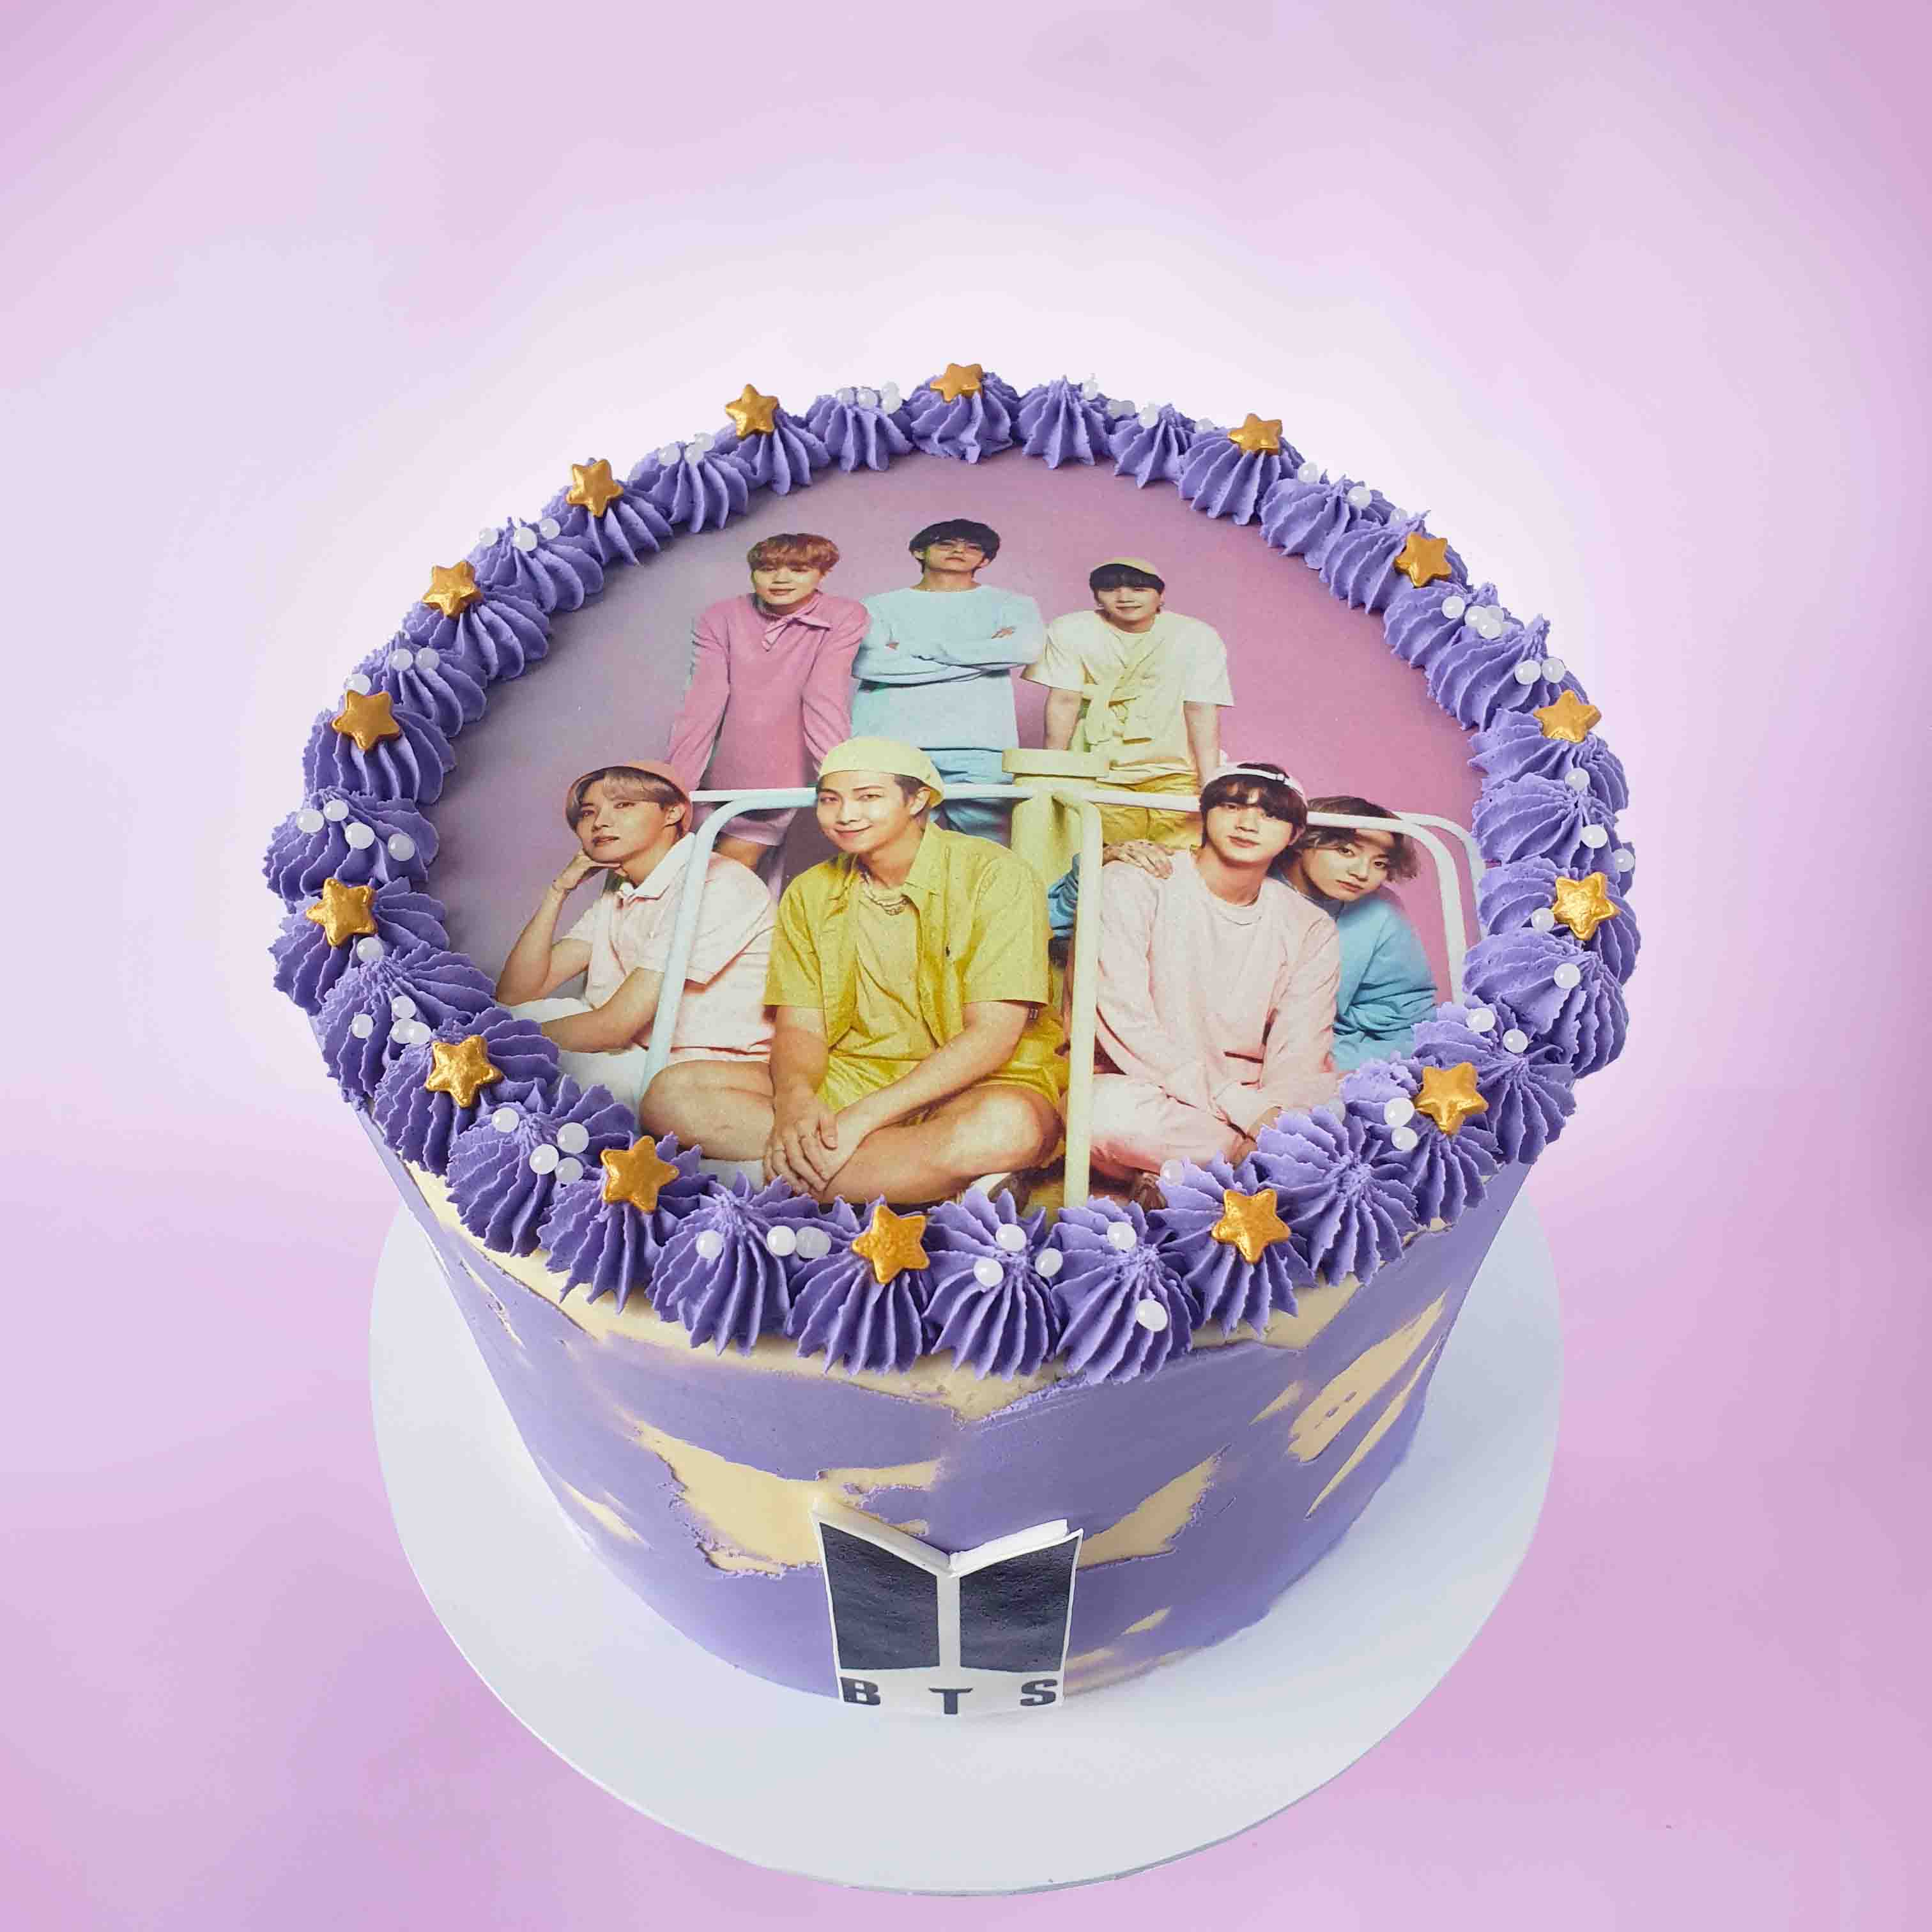 BTS torta - Decorated Cake by macka - CakesDecor